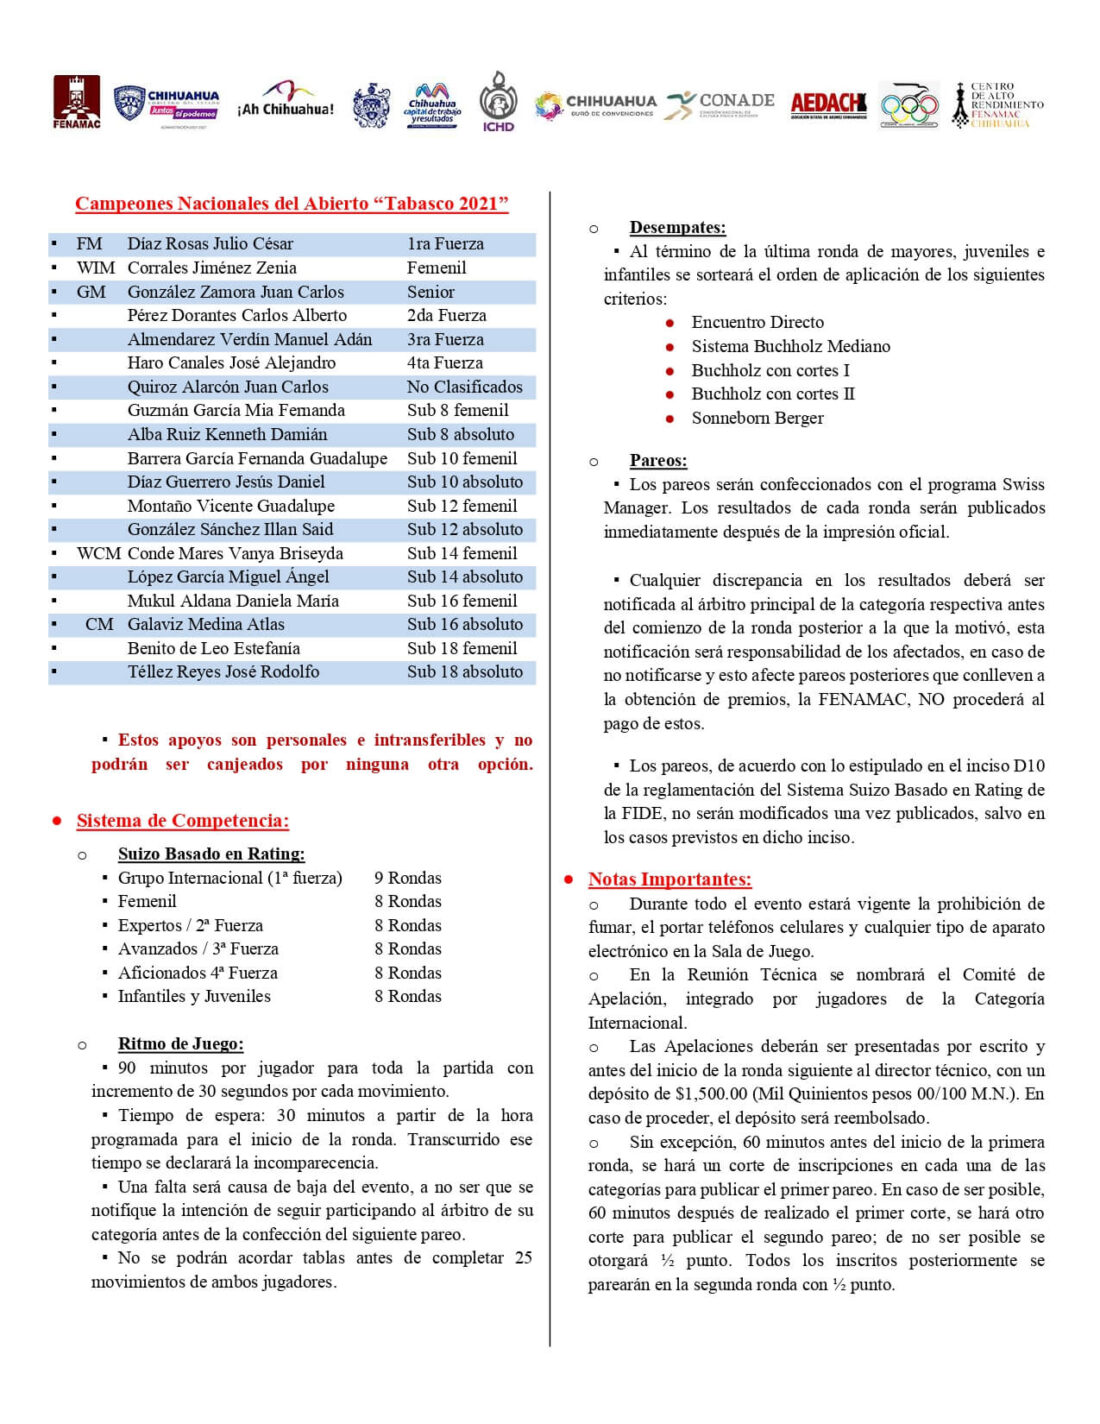 Convocatorio de  LXVII Campeonato Nacional e Internacional Abierto Mexicano De Ajedrez “Chihuahua 2022”